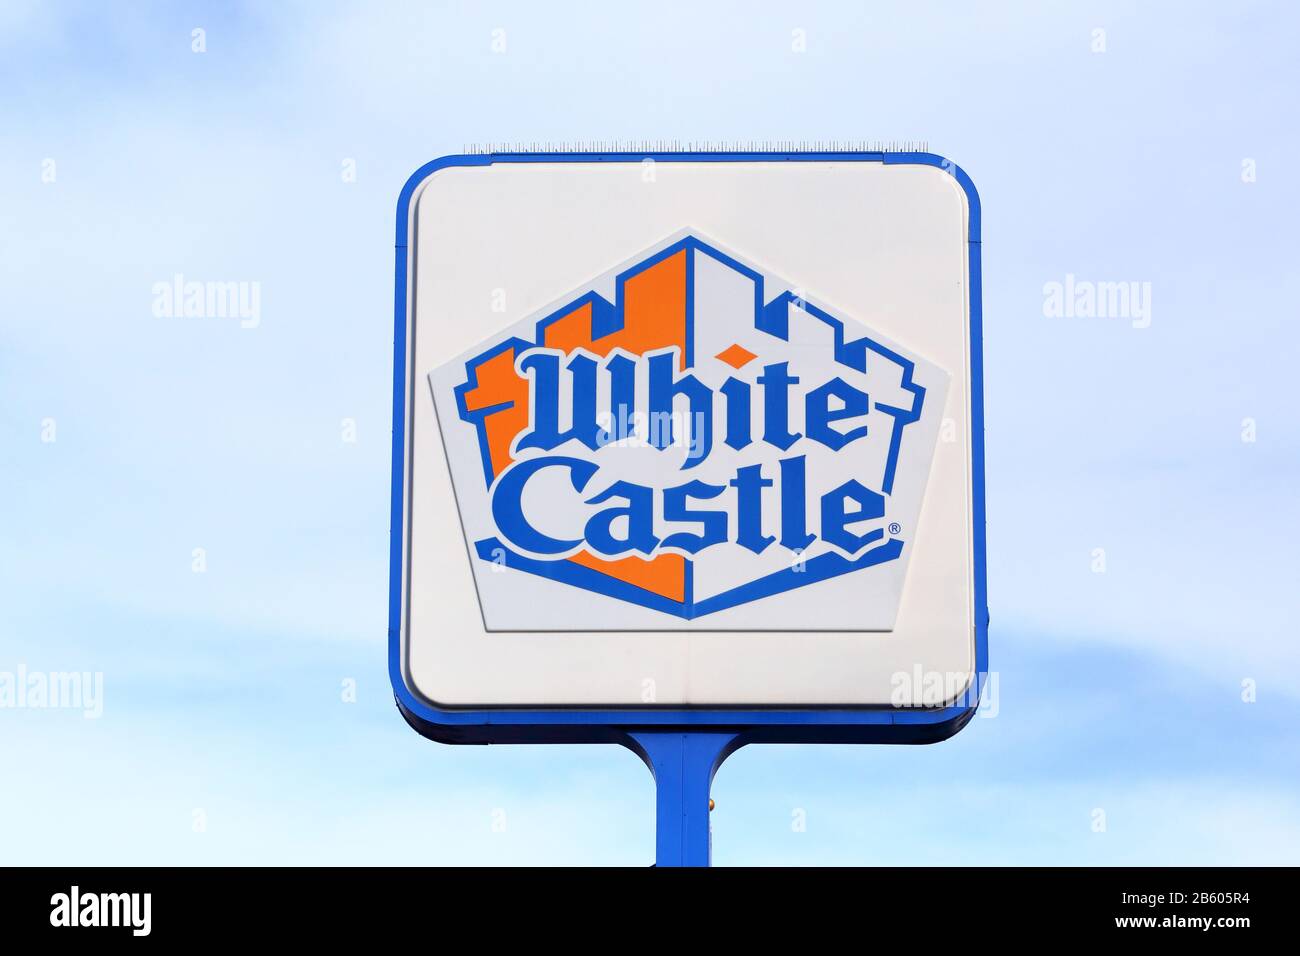 A White Castle sign on a pole against a blue sky. Stock Photo